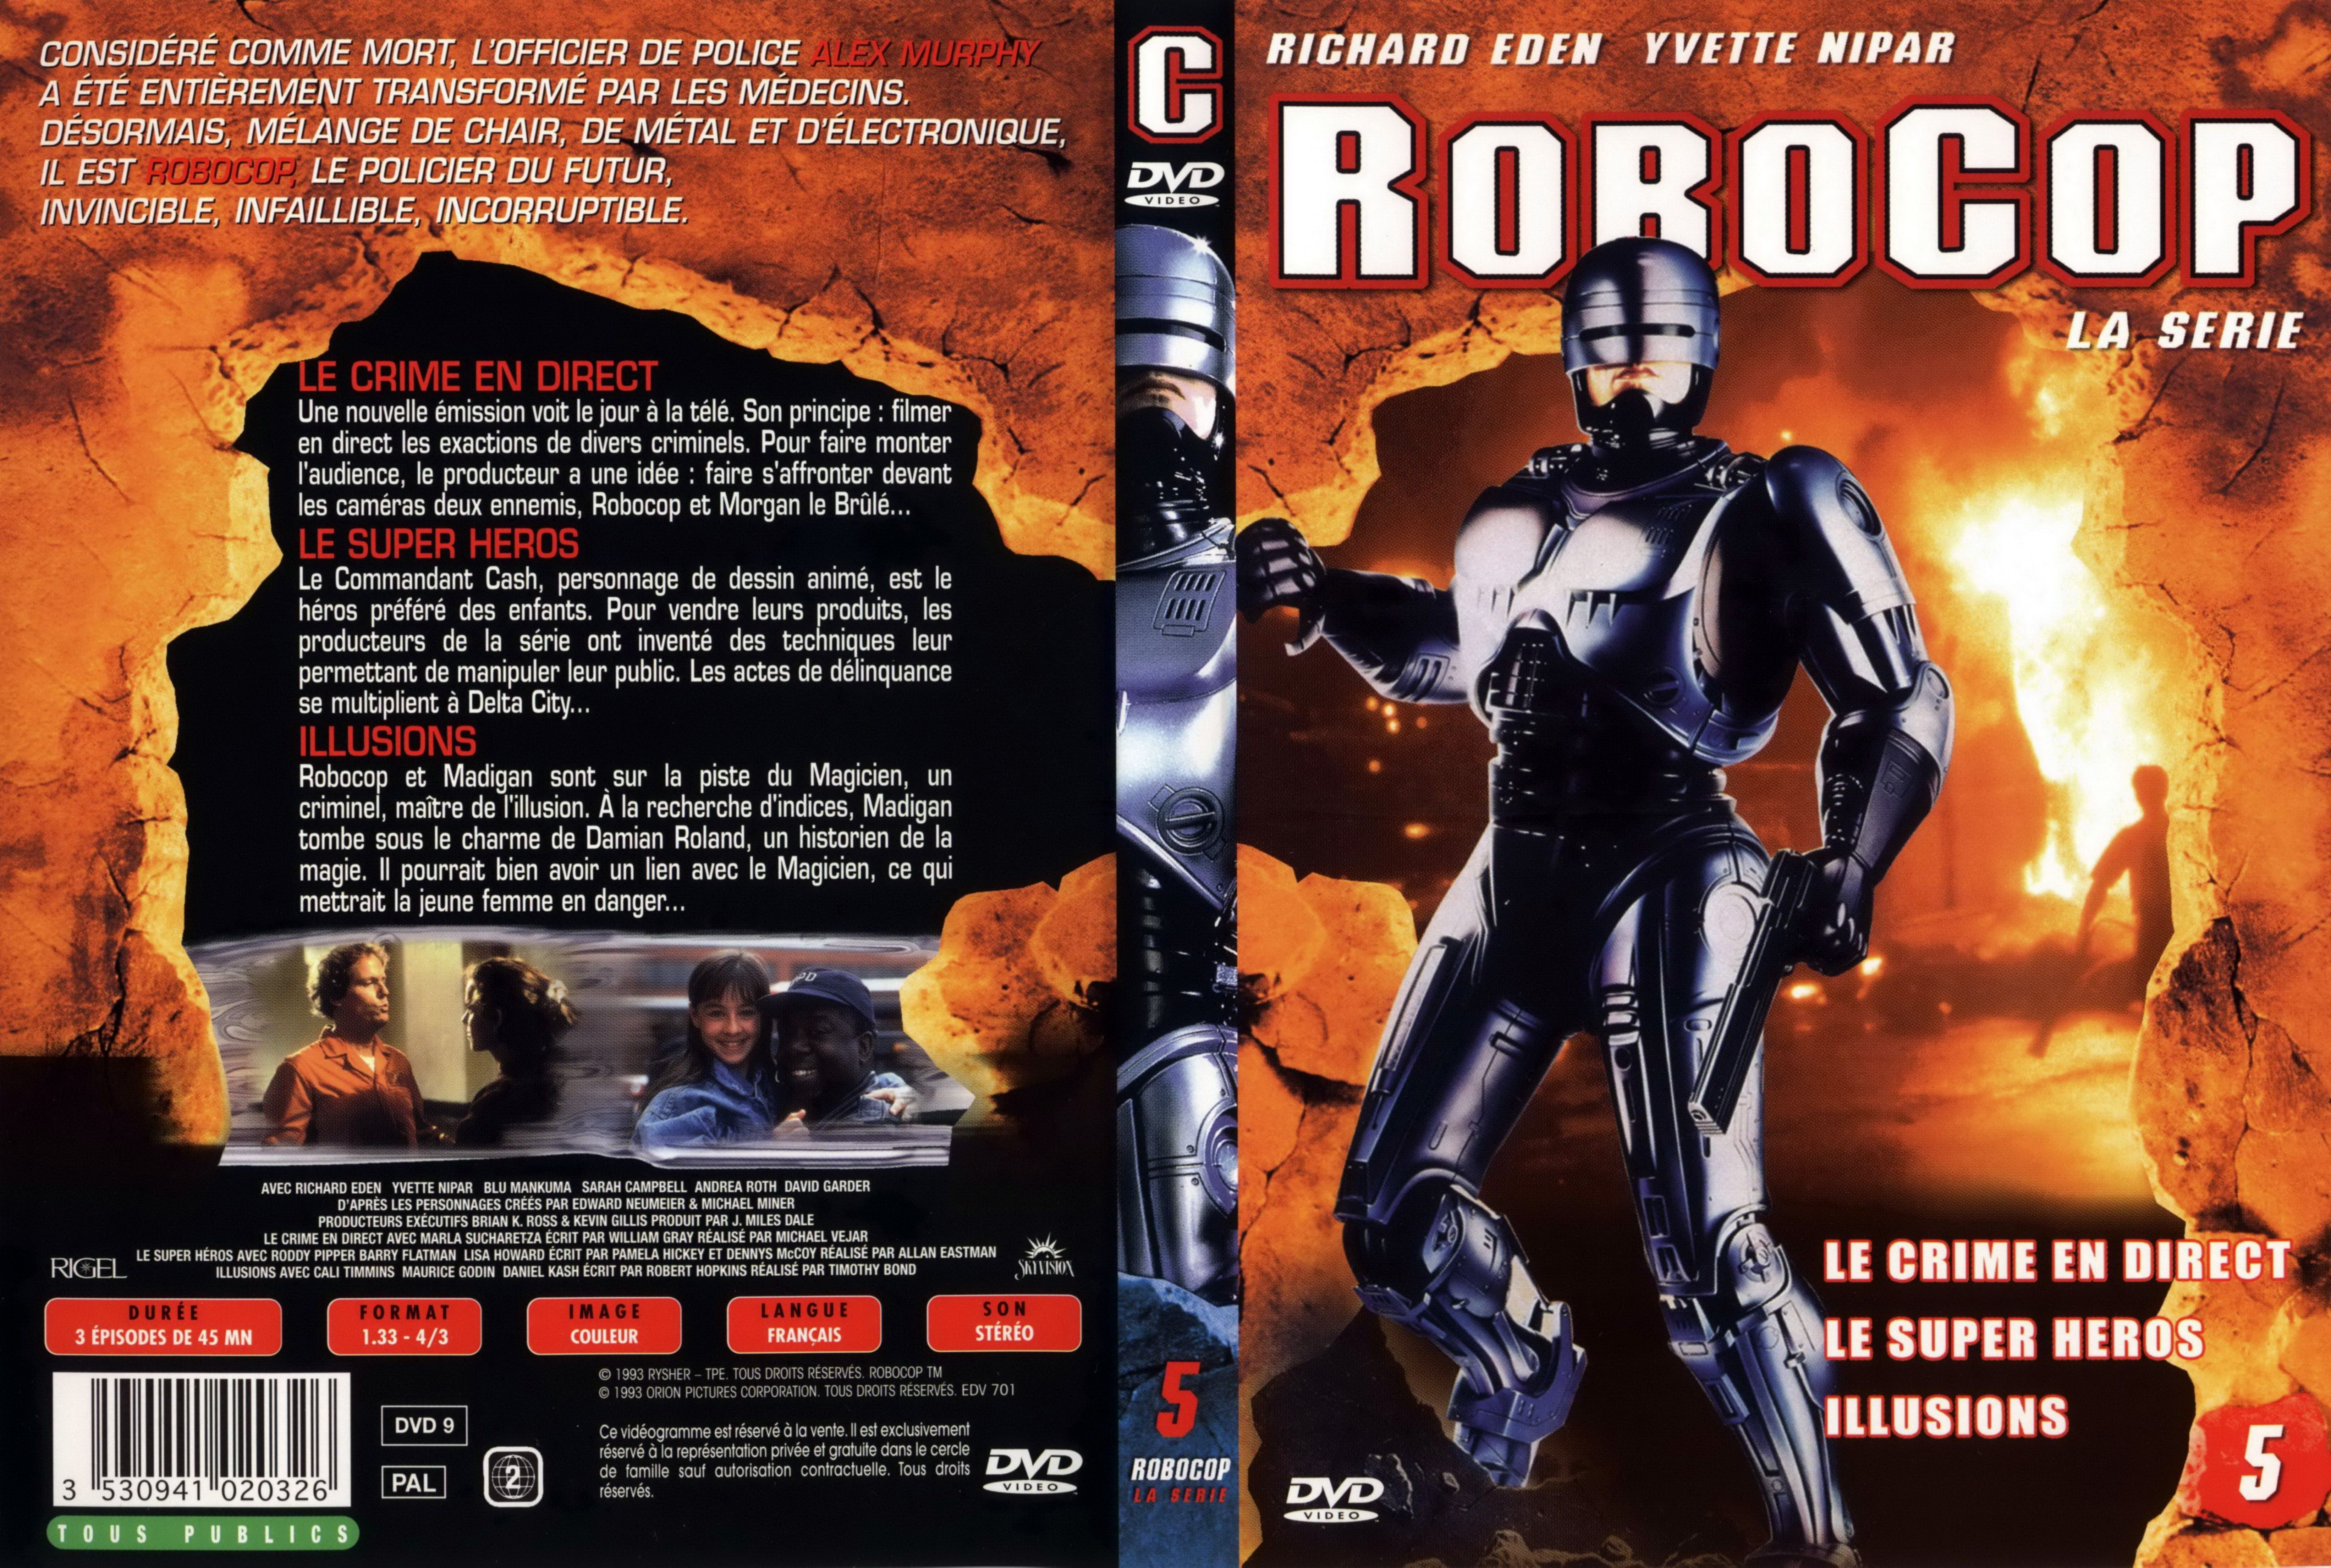 Jaquette DVD Robocop la srie vol 5